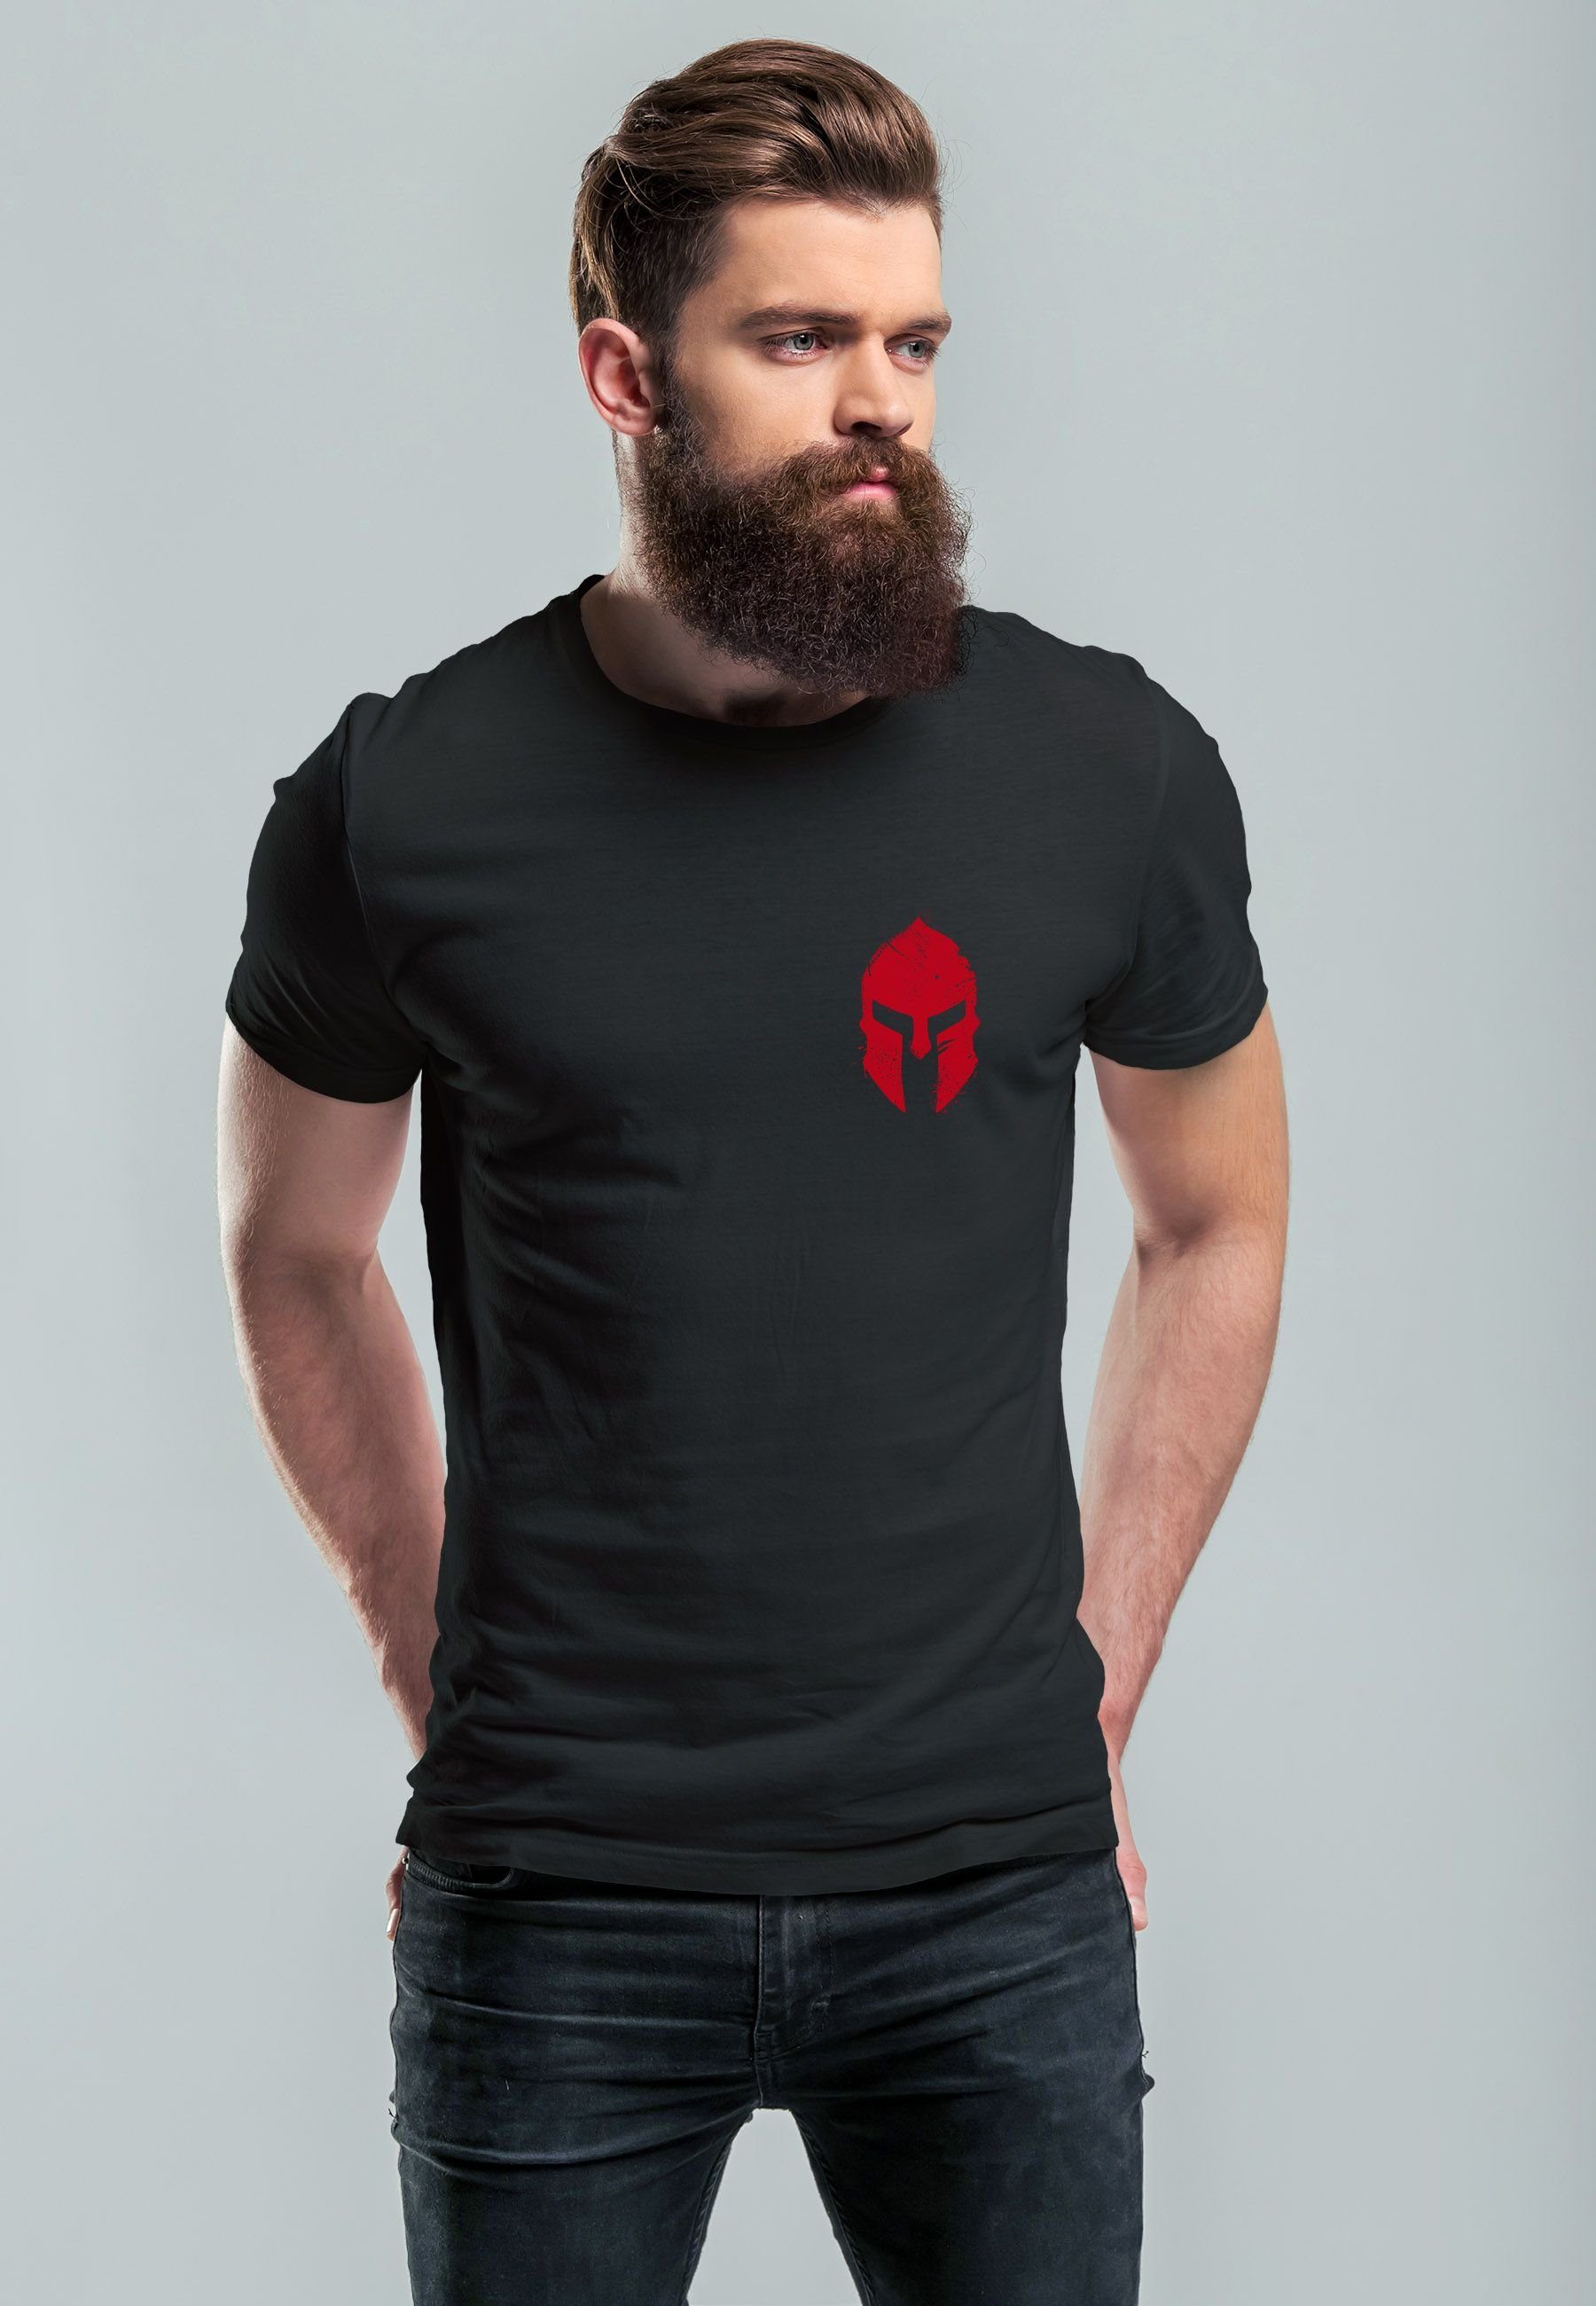 Sparta-Helm Warr Neverless Print mit Print Gladiator Print-Shirt Krieger Herren Spartaner schwarz-rot T-Shirt Logo